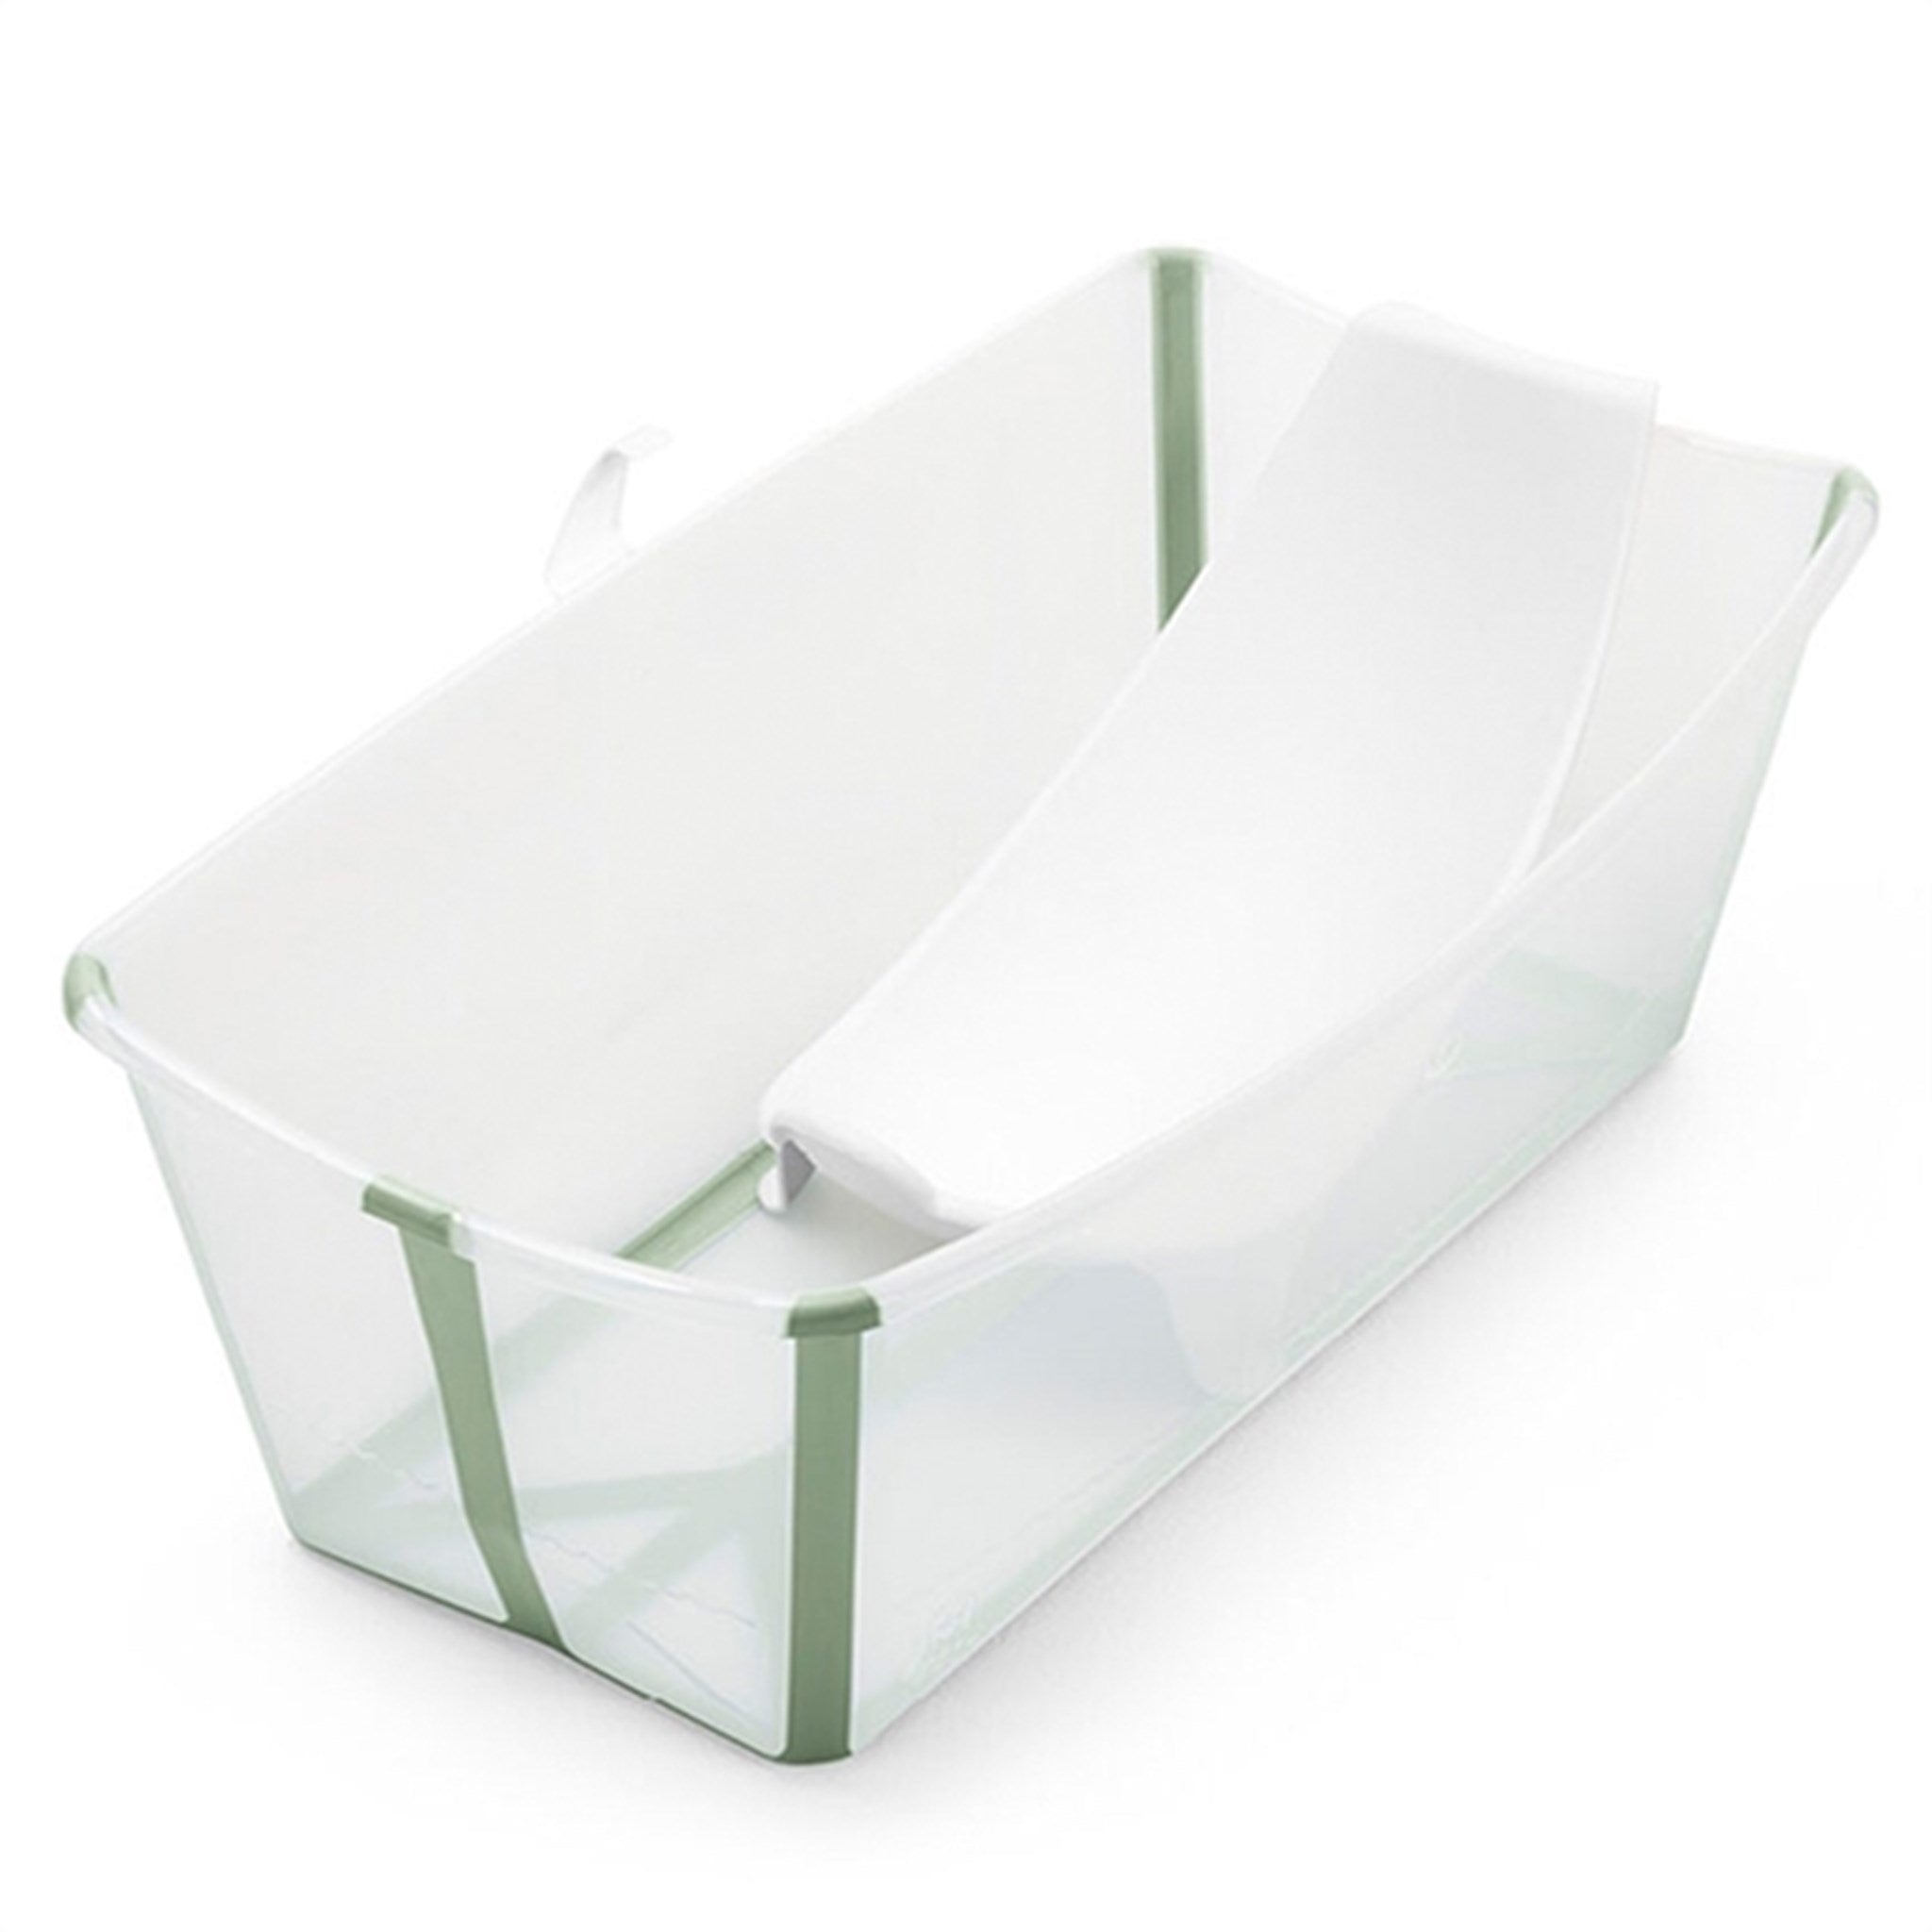 Stokke® Flexi Bath® Transparent Green